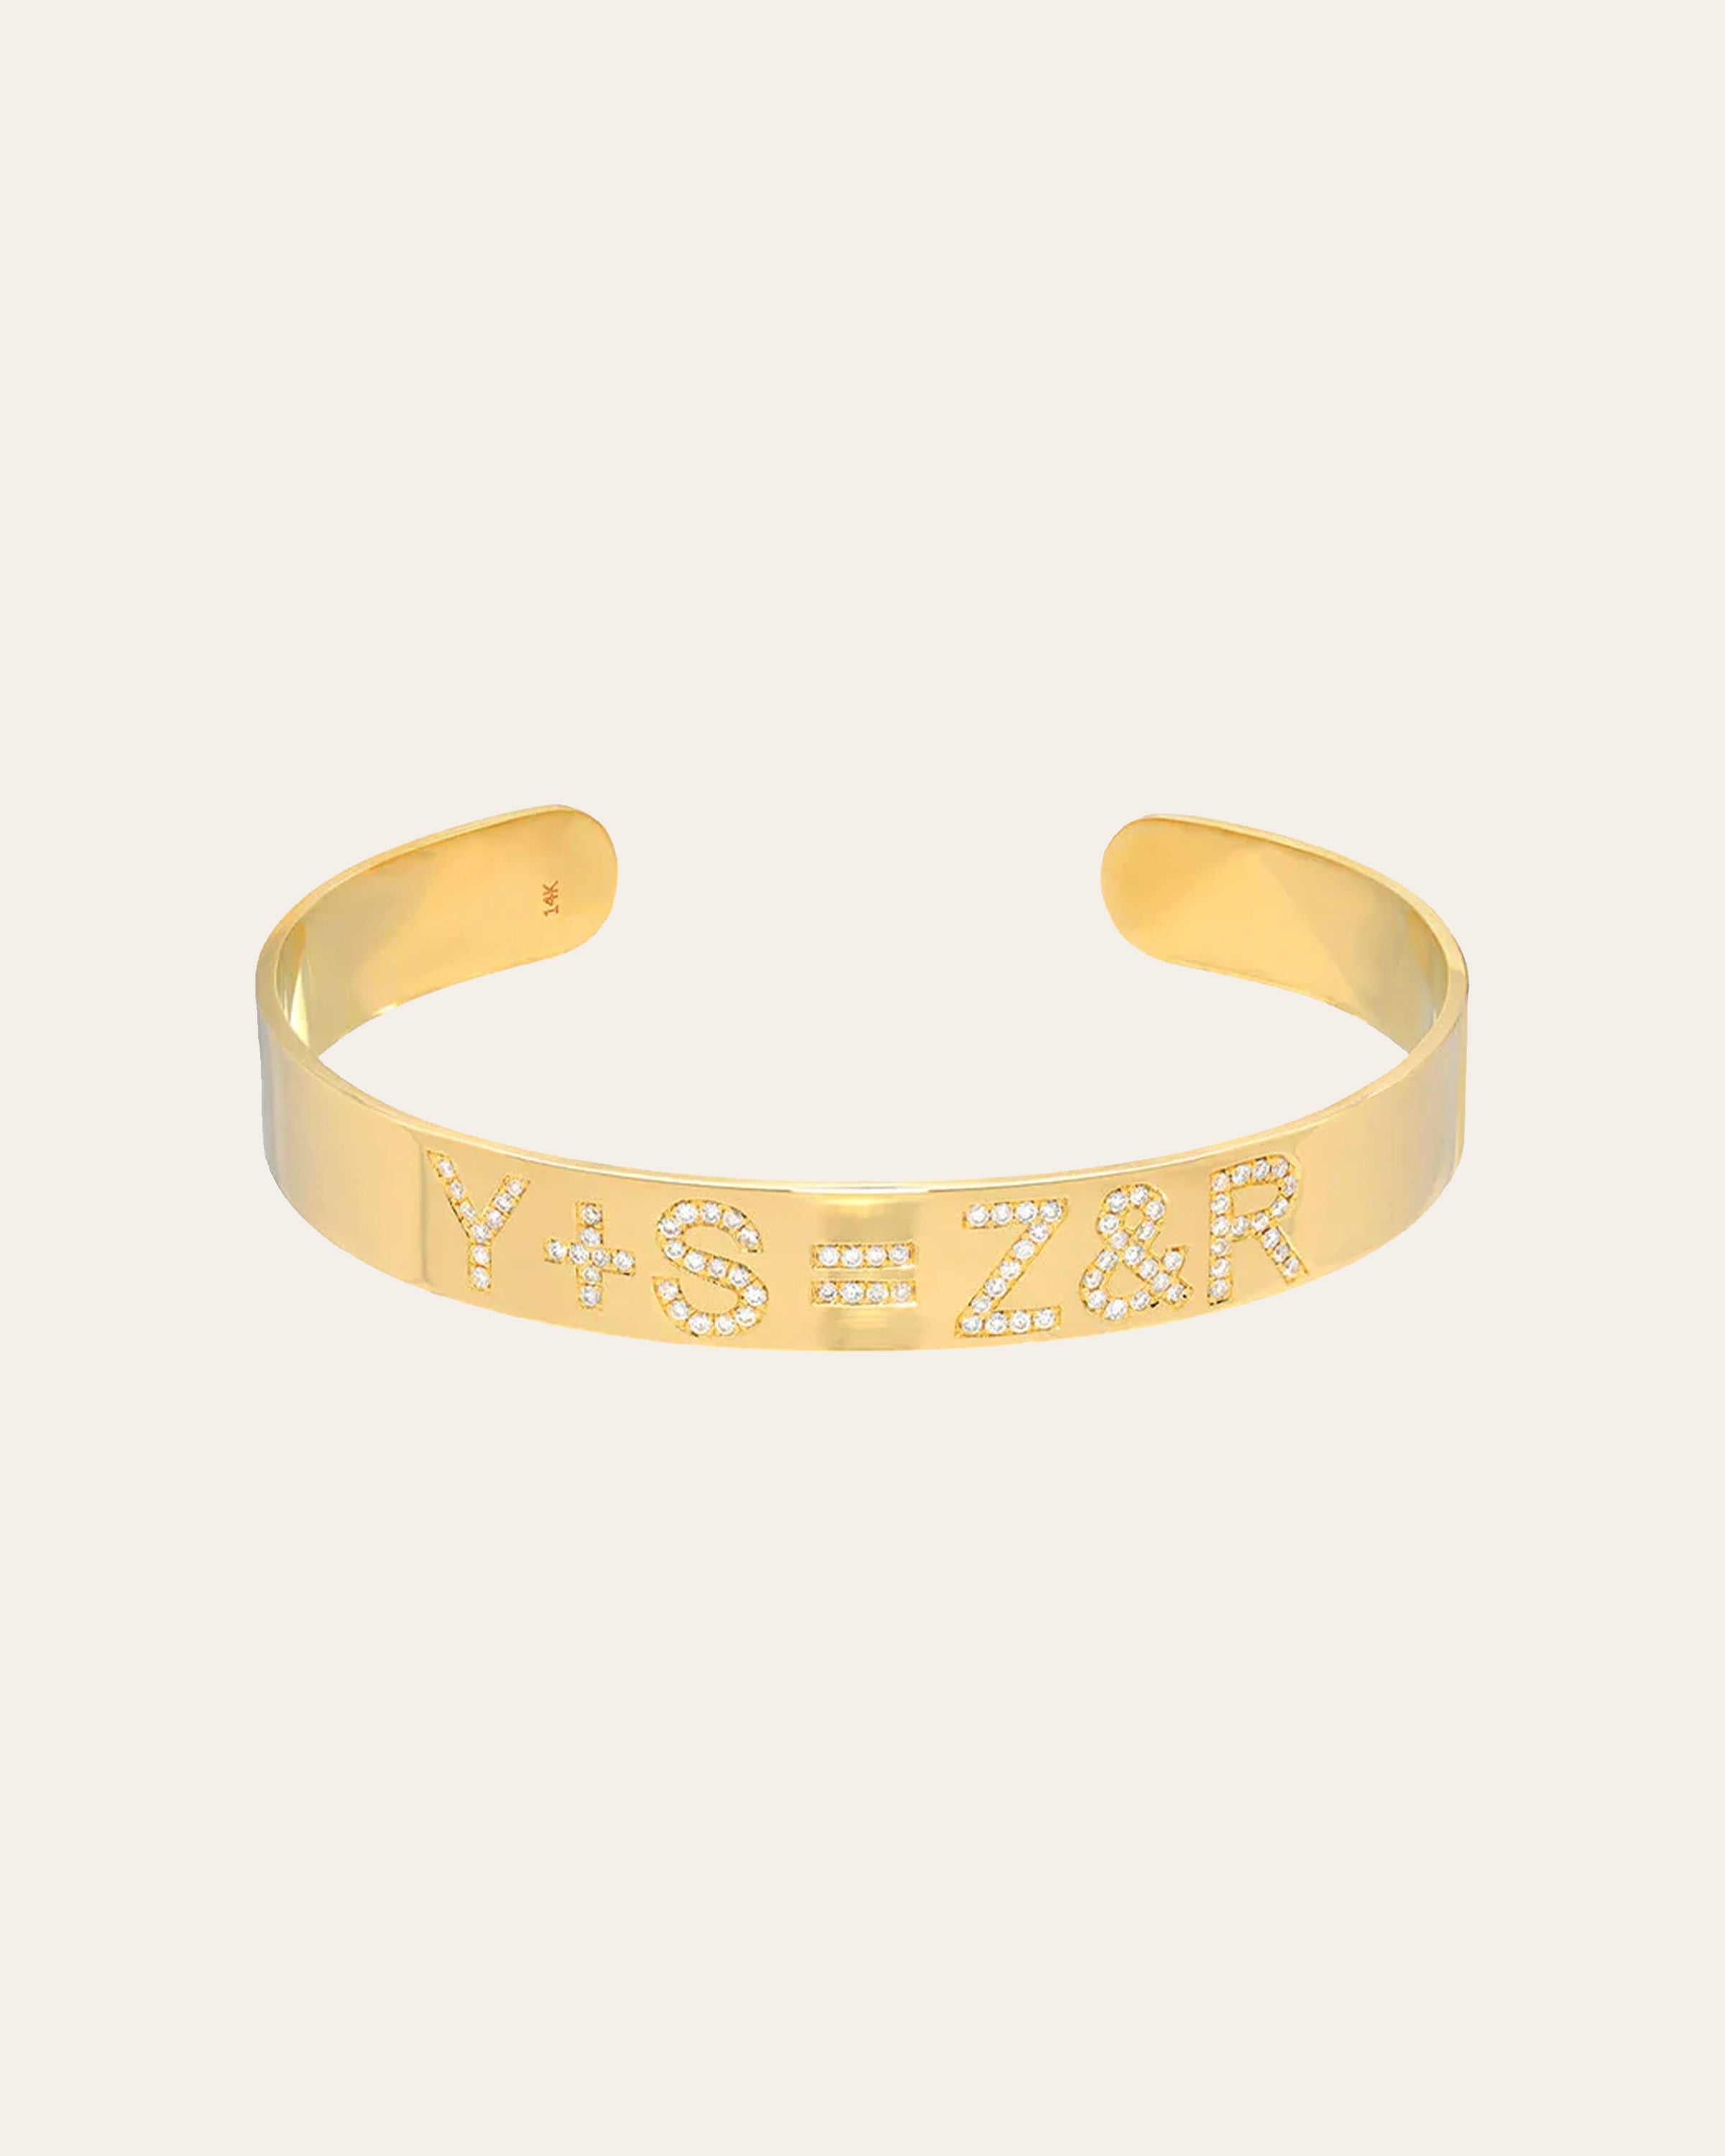 Personalized Gold Cuff Bracelet